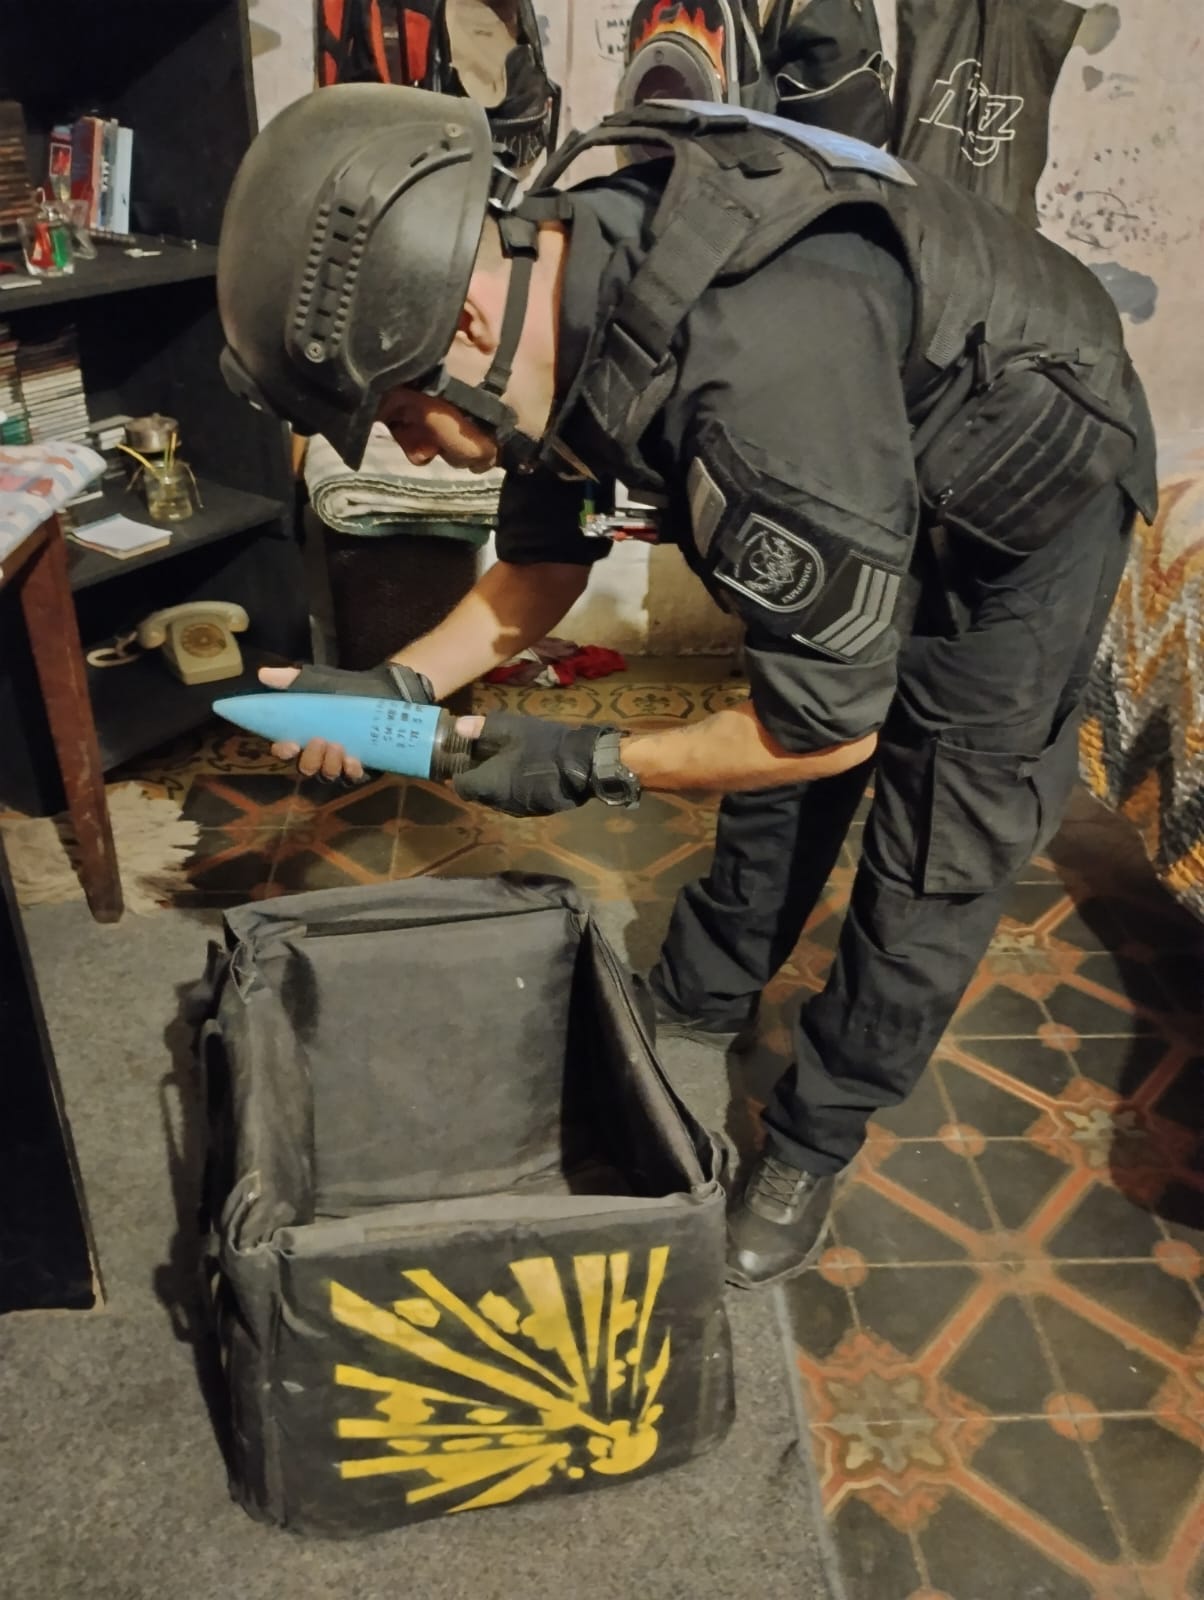 Encontraron un peligroso artefacto explosivo en un baldío